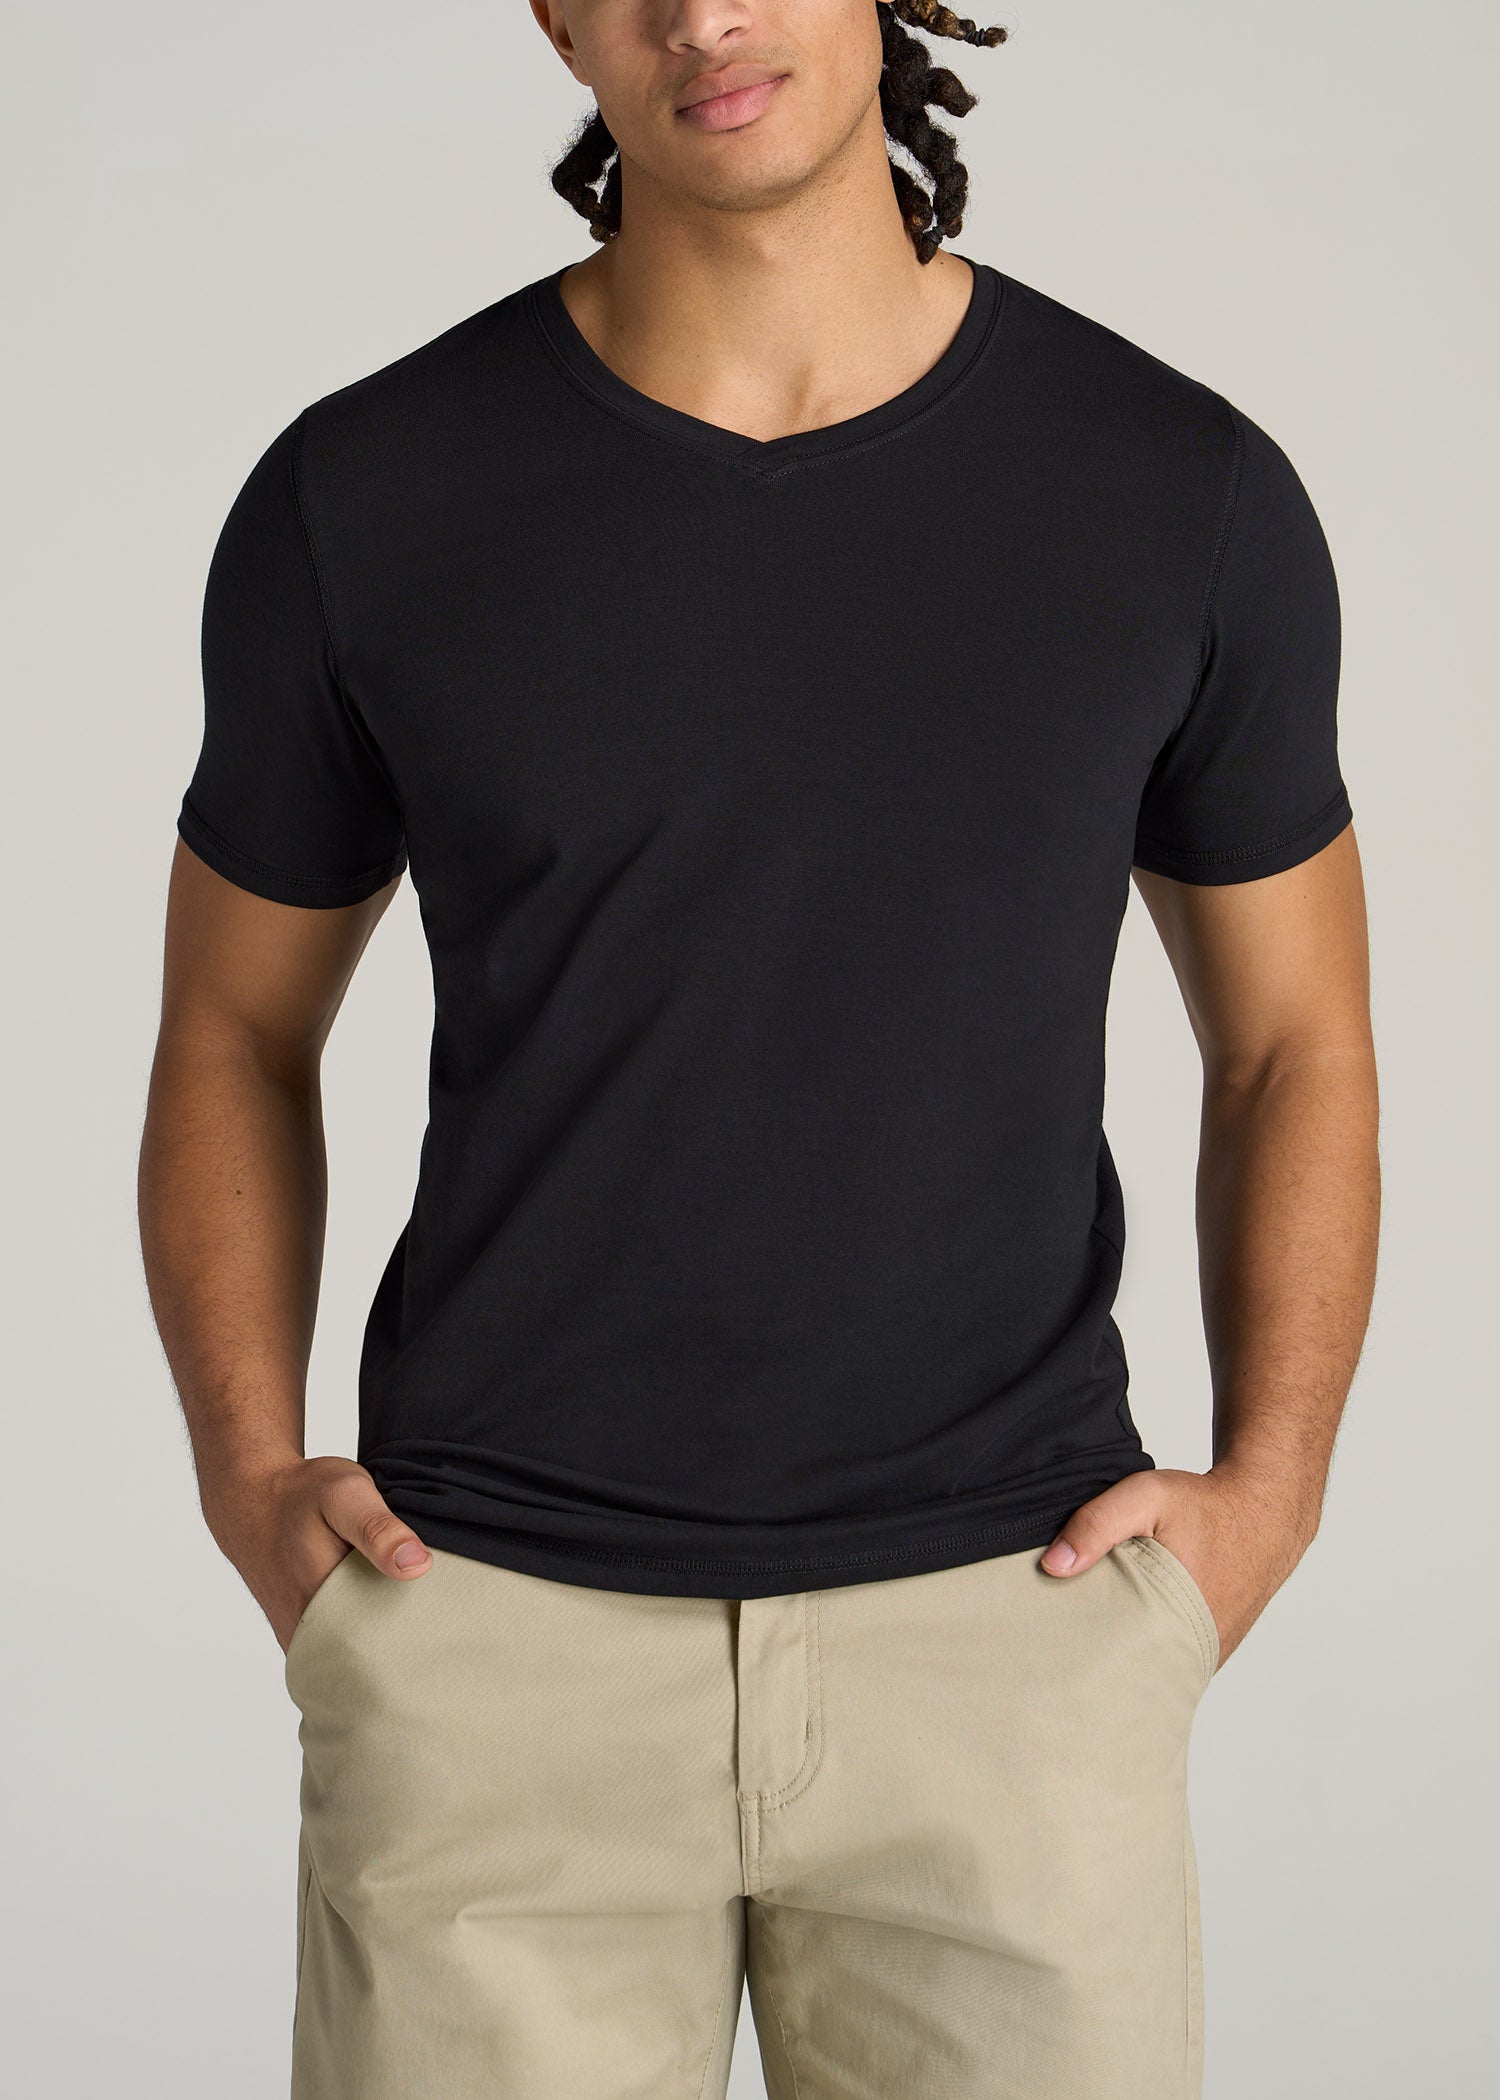 Long Sleeve Slim Fit Shirt: Tall Men's Long Sleeve Black Tee